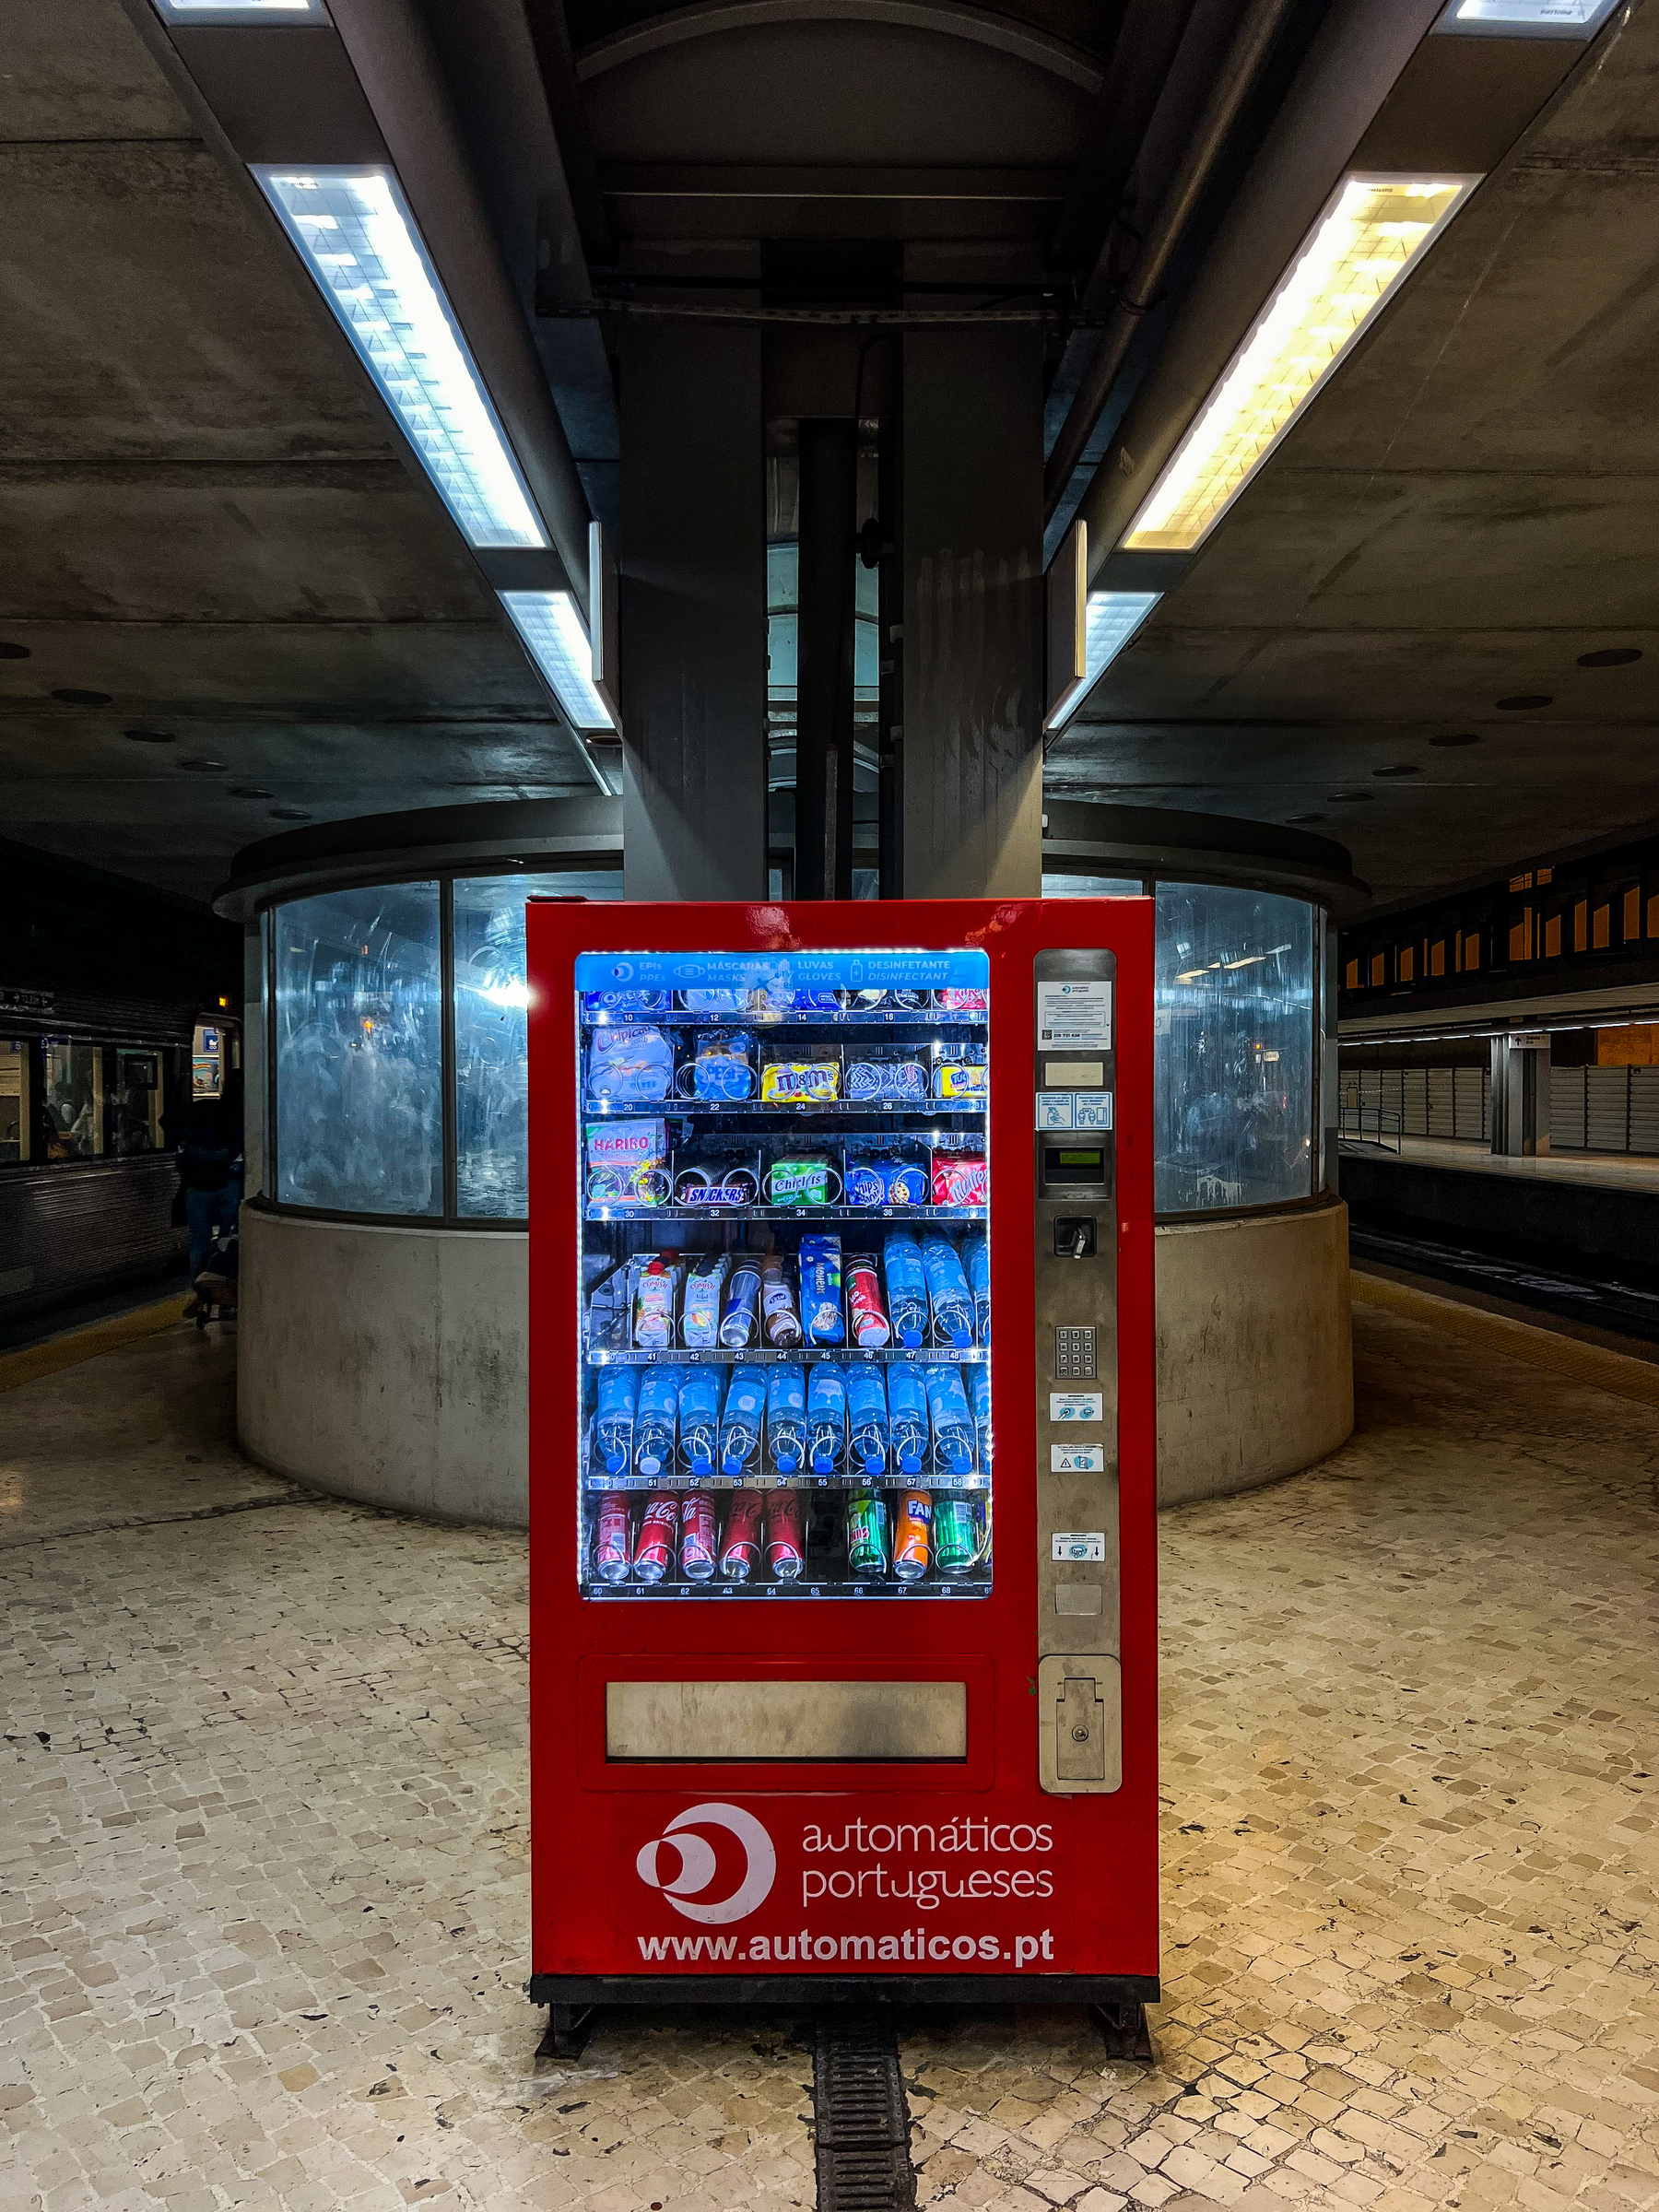 A vending machine at a train station.